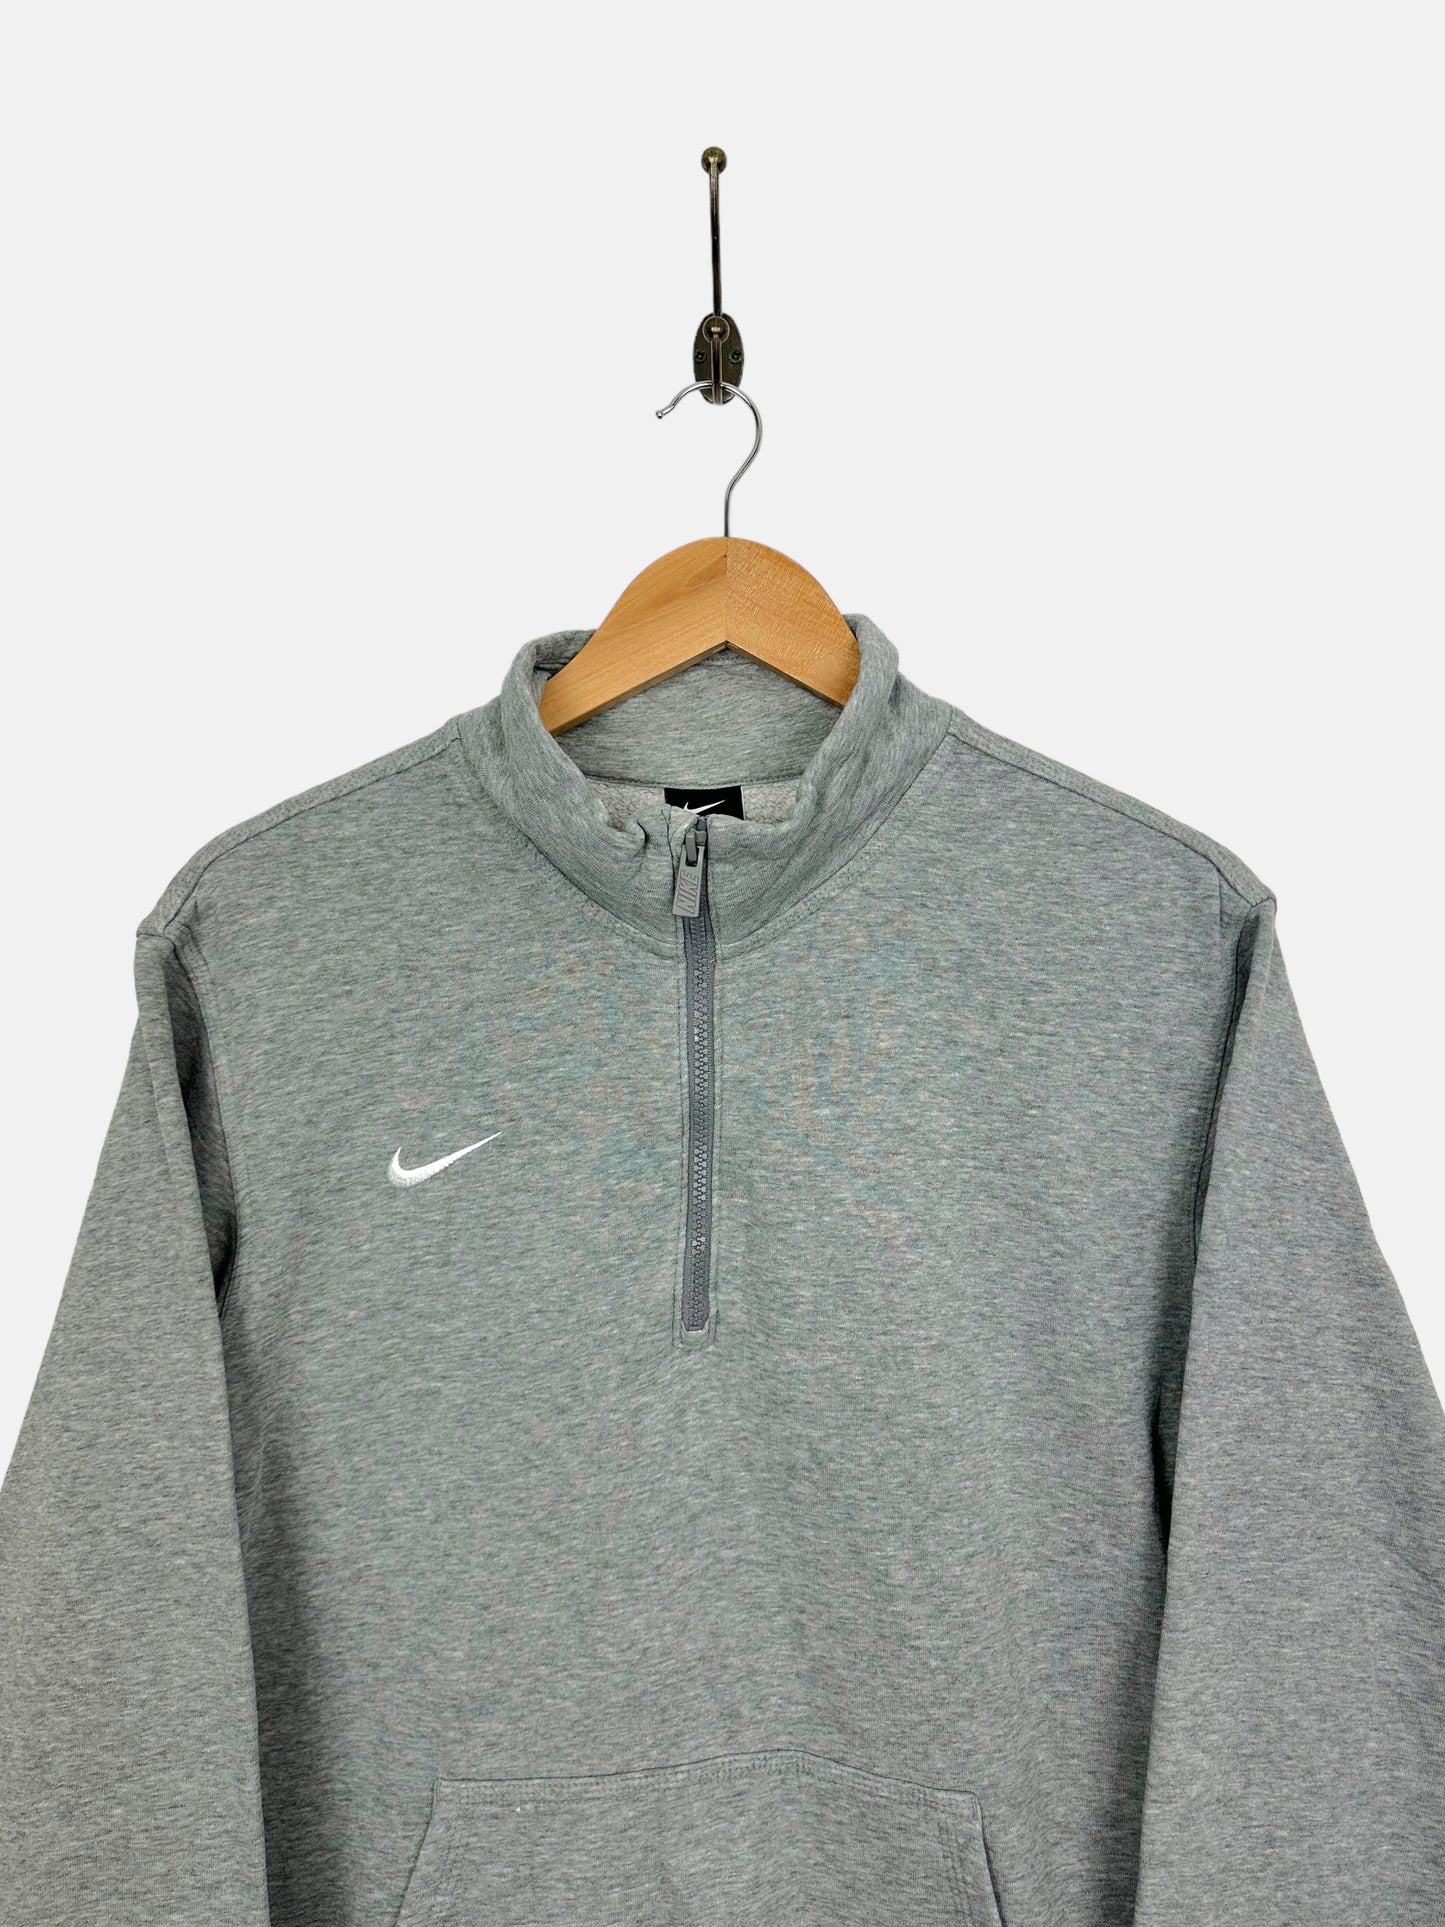 Nike Embroidered Vintage Quarterzip Sweatshirt 10-12